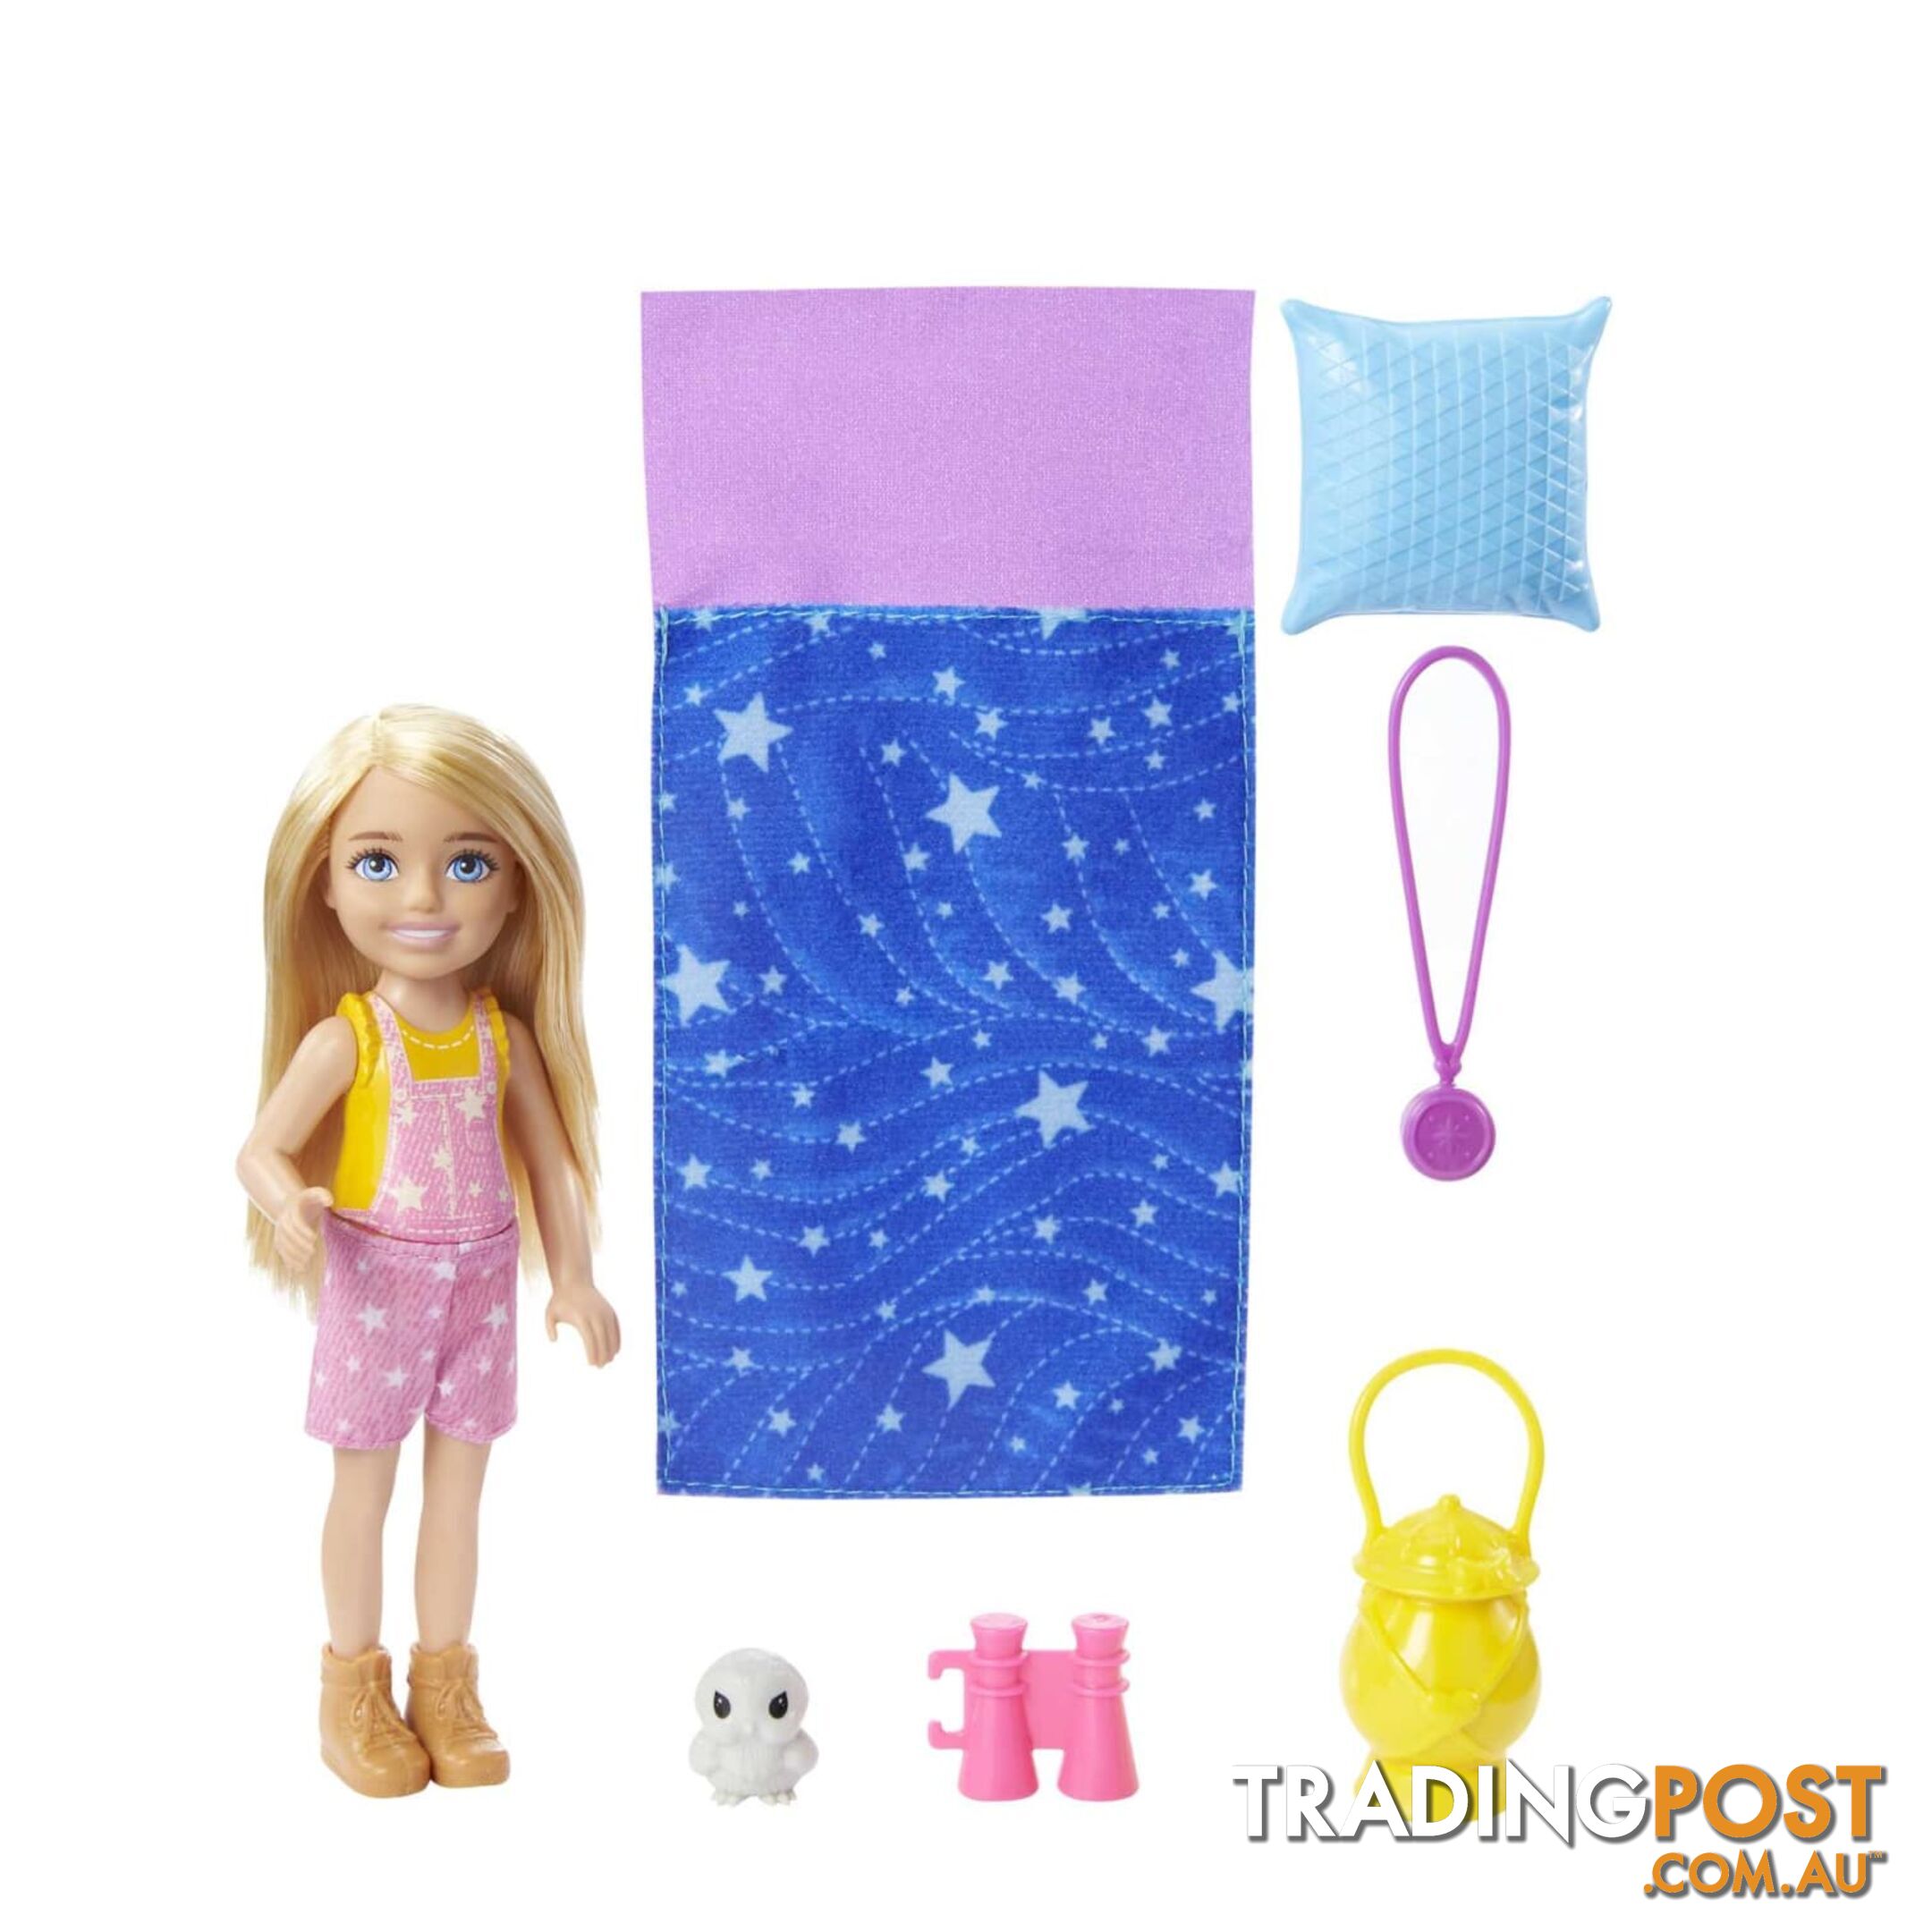 Barbie Doll And Accessories  Mattel Hdf77 - 194735022410